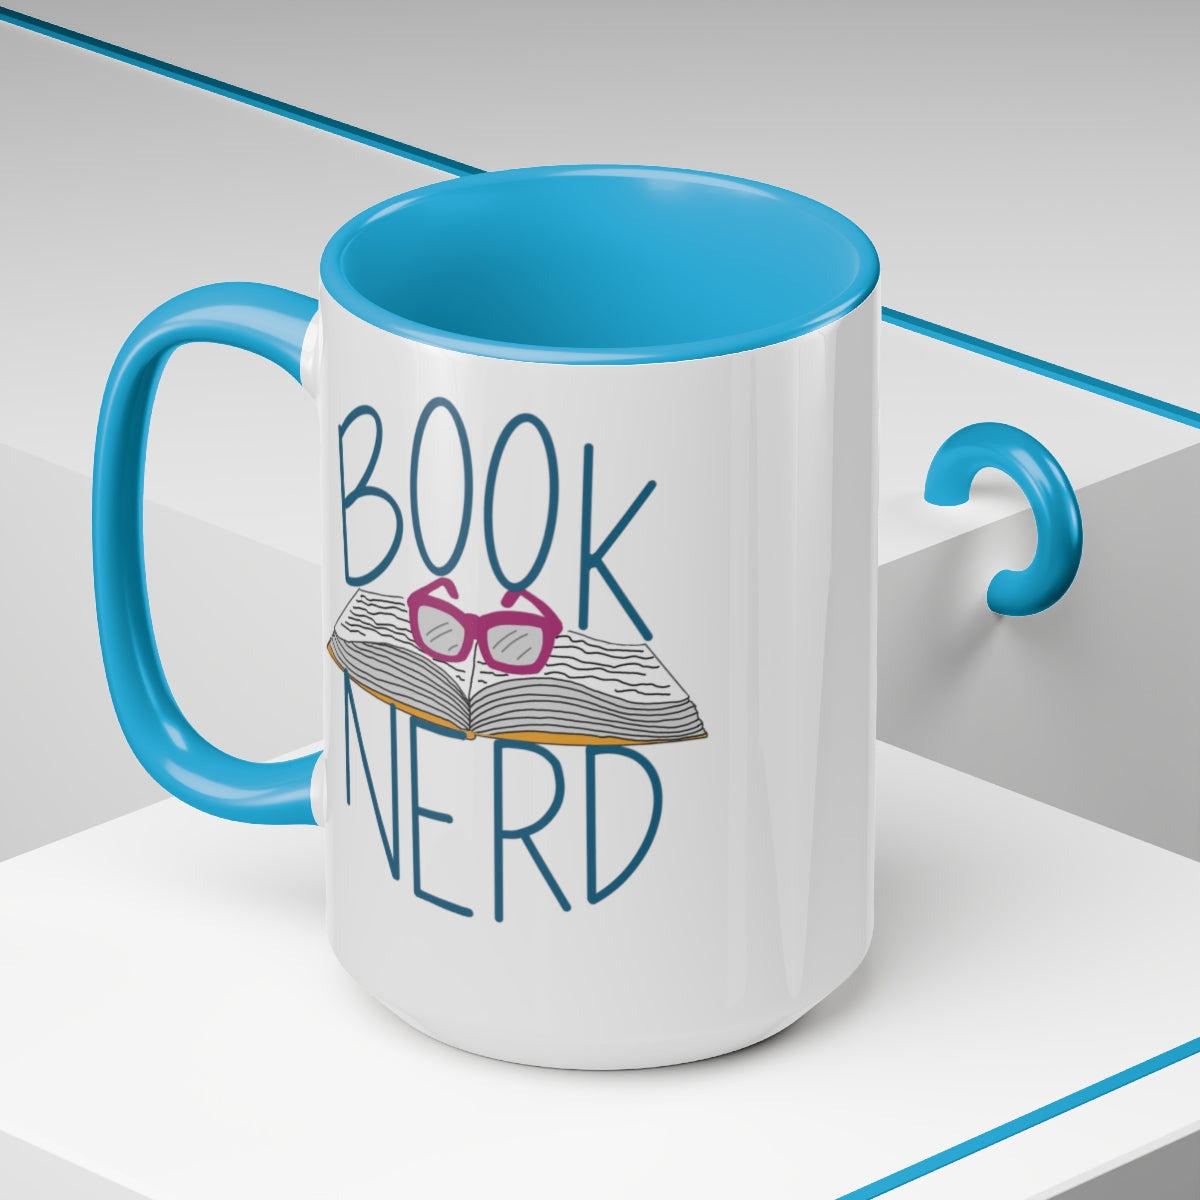 Book Nerd Accent Coffee Mug, 11oz (Blue and Black Accent)